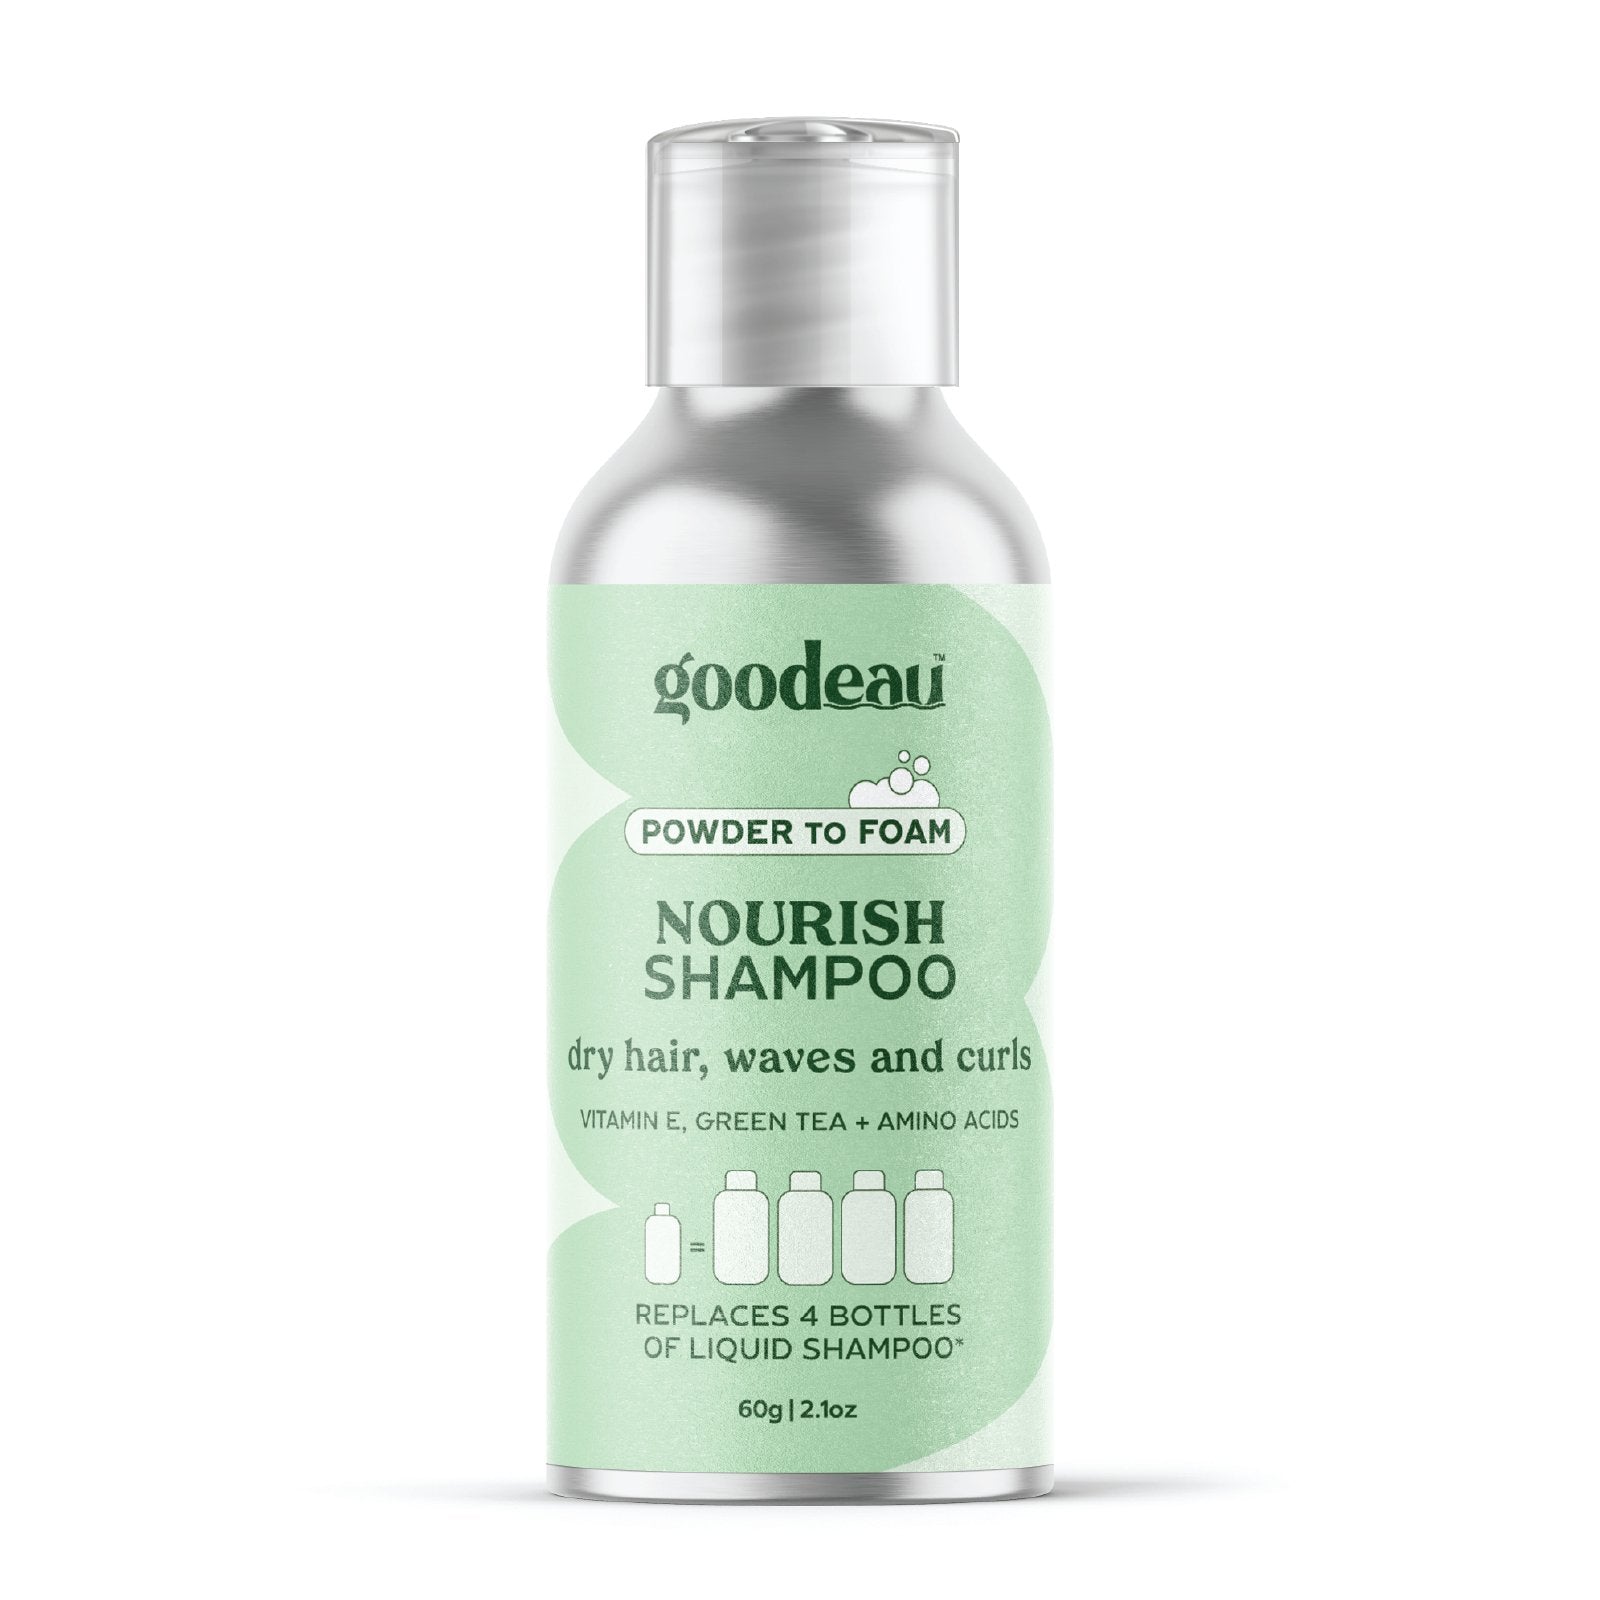 Nourish Shampoo - Goodeau